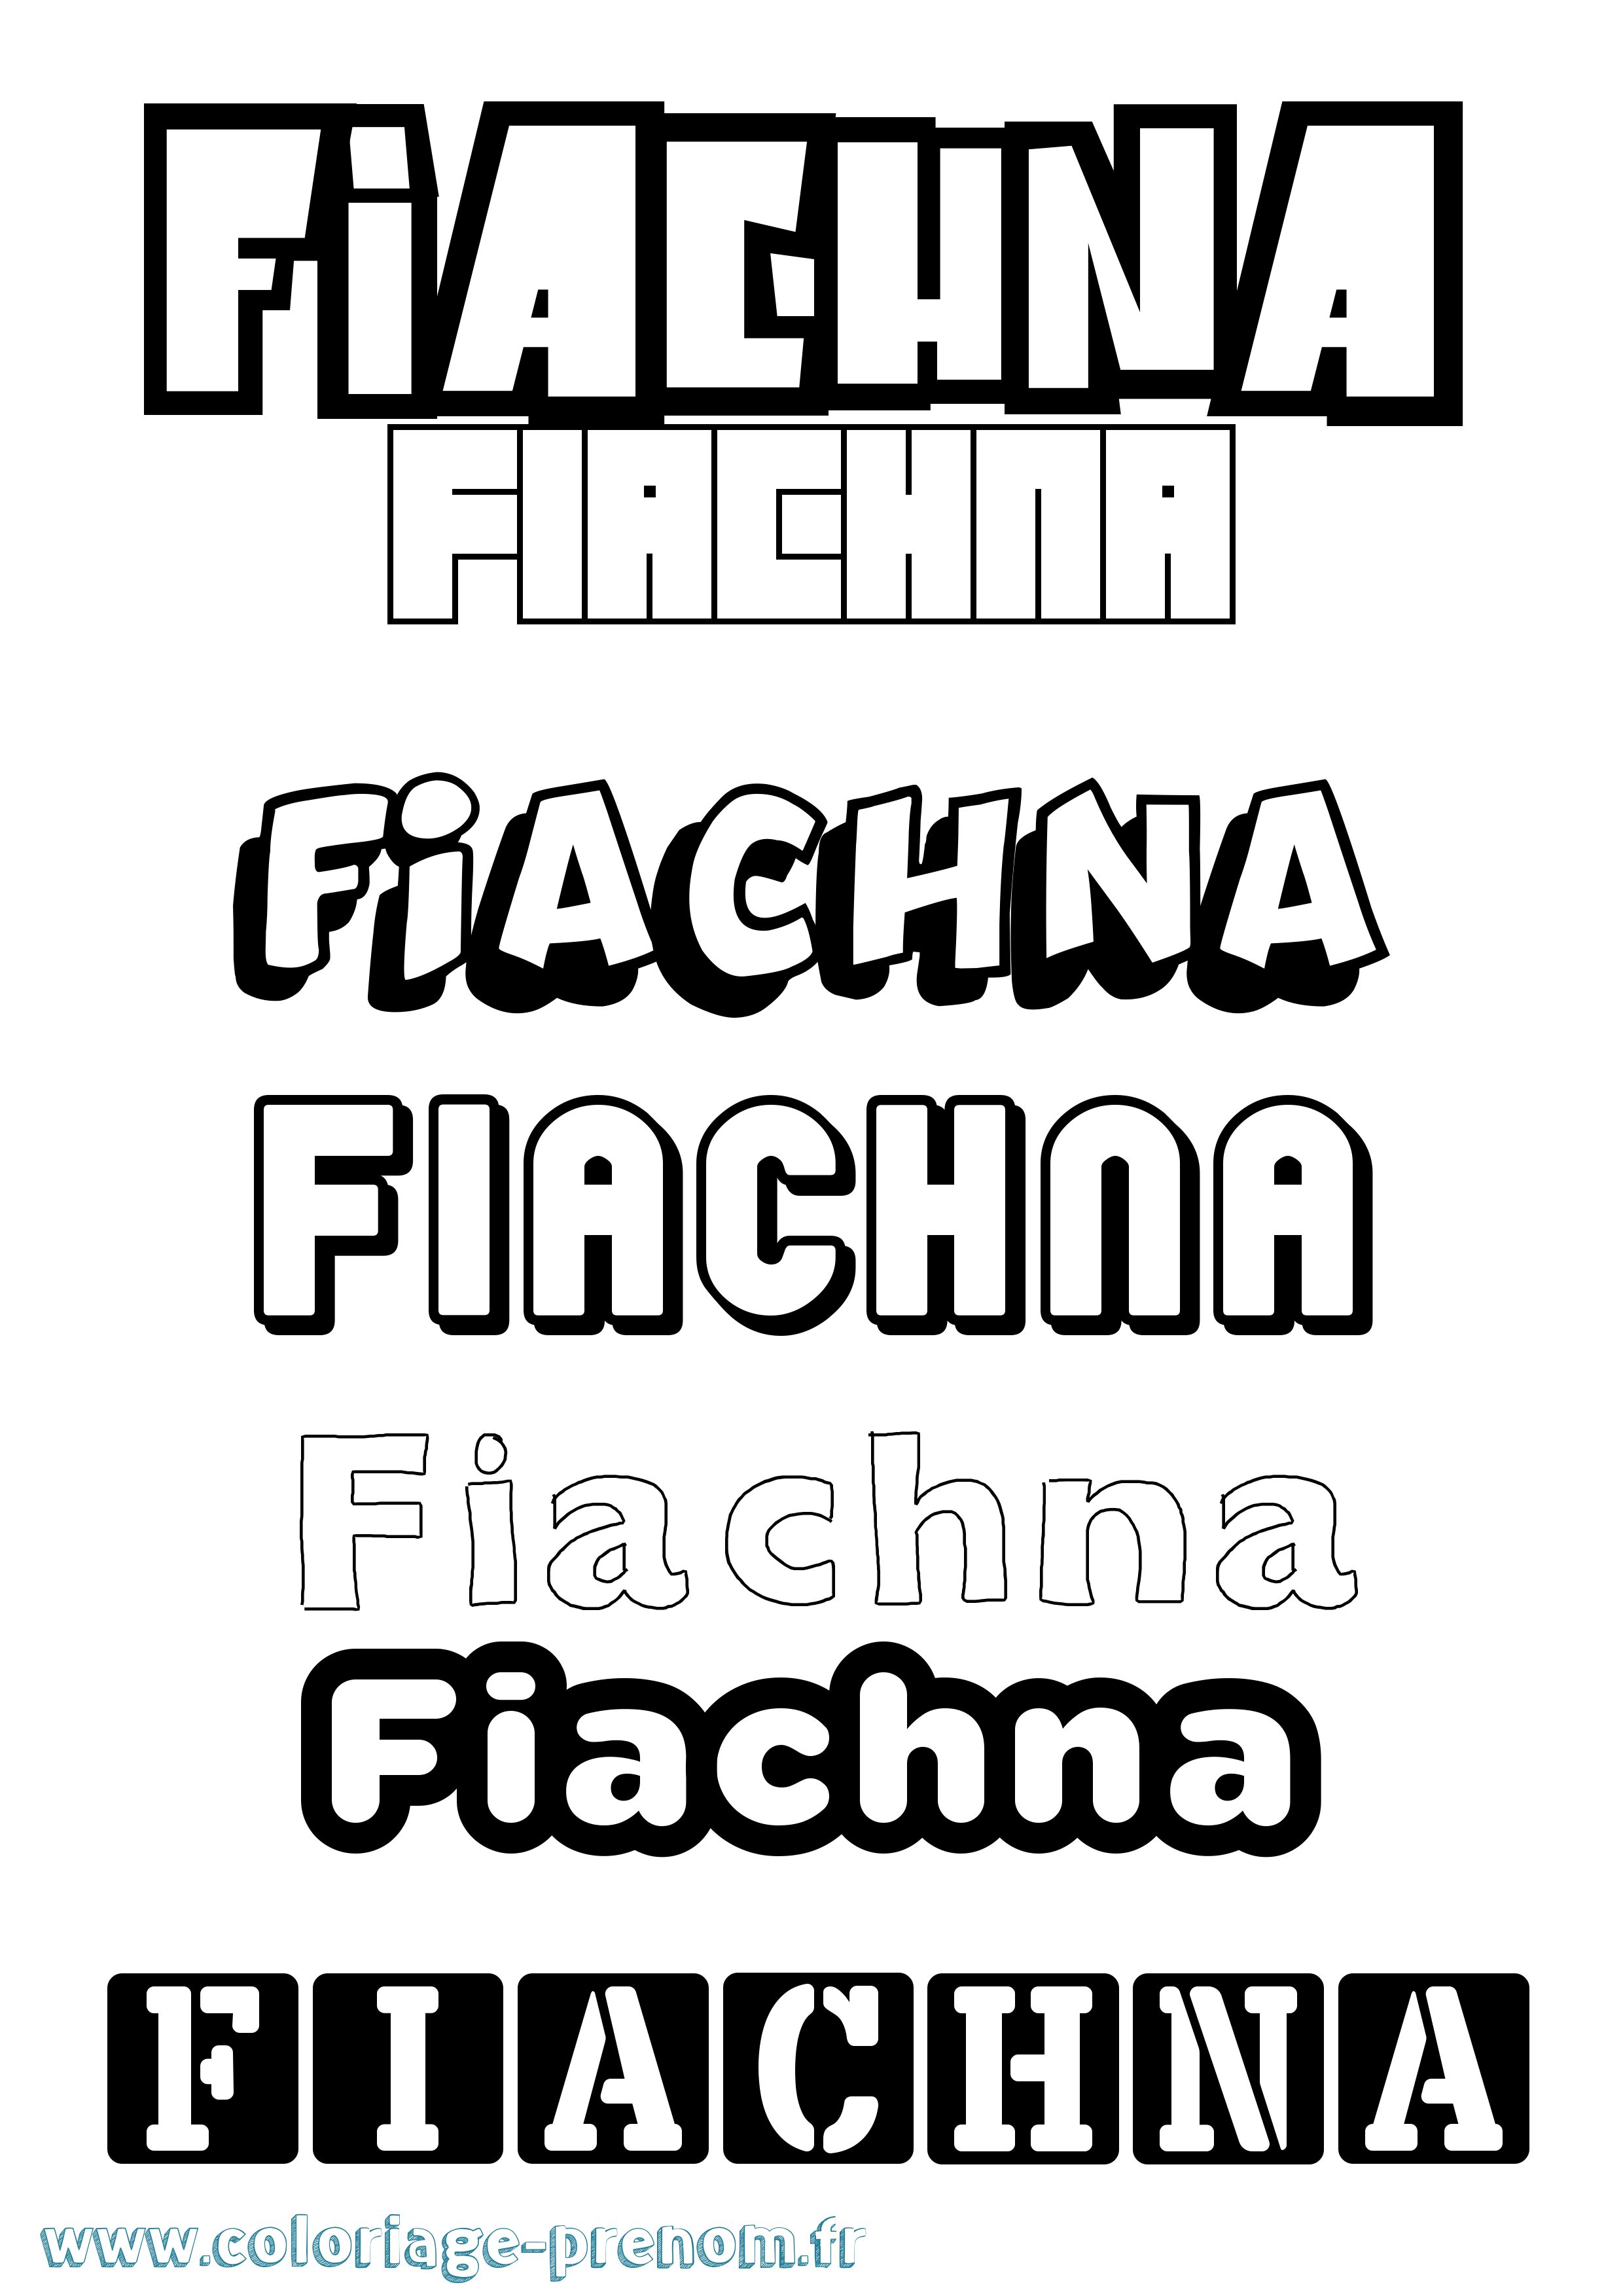 Coloriage prénom Fiachna Simple